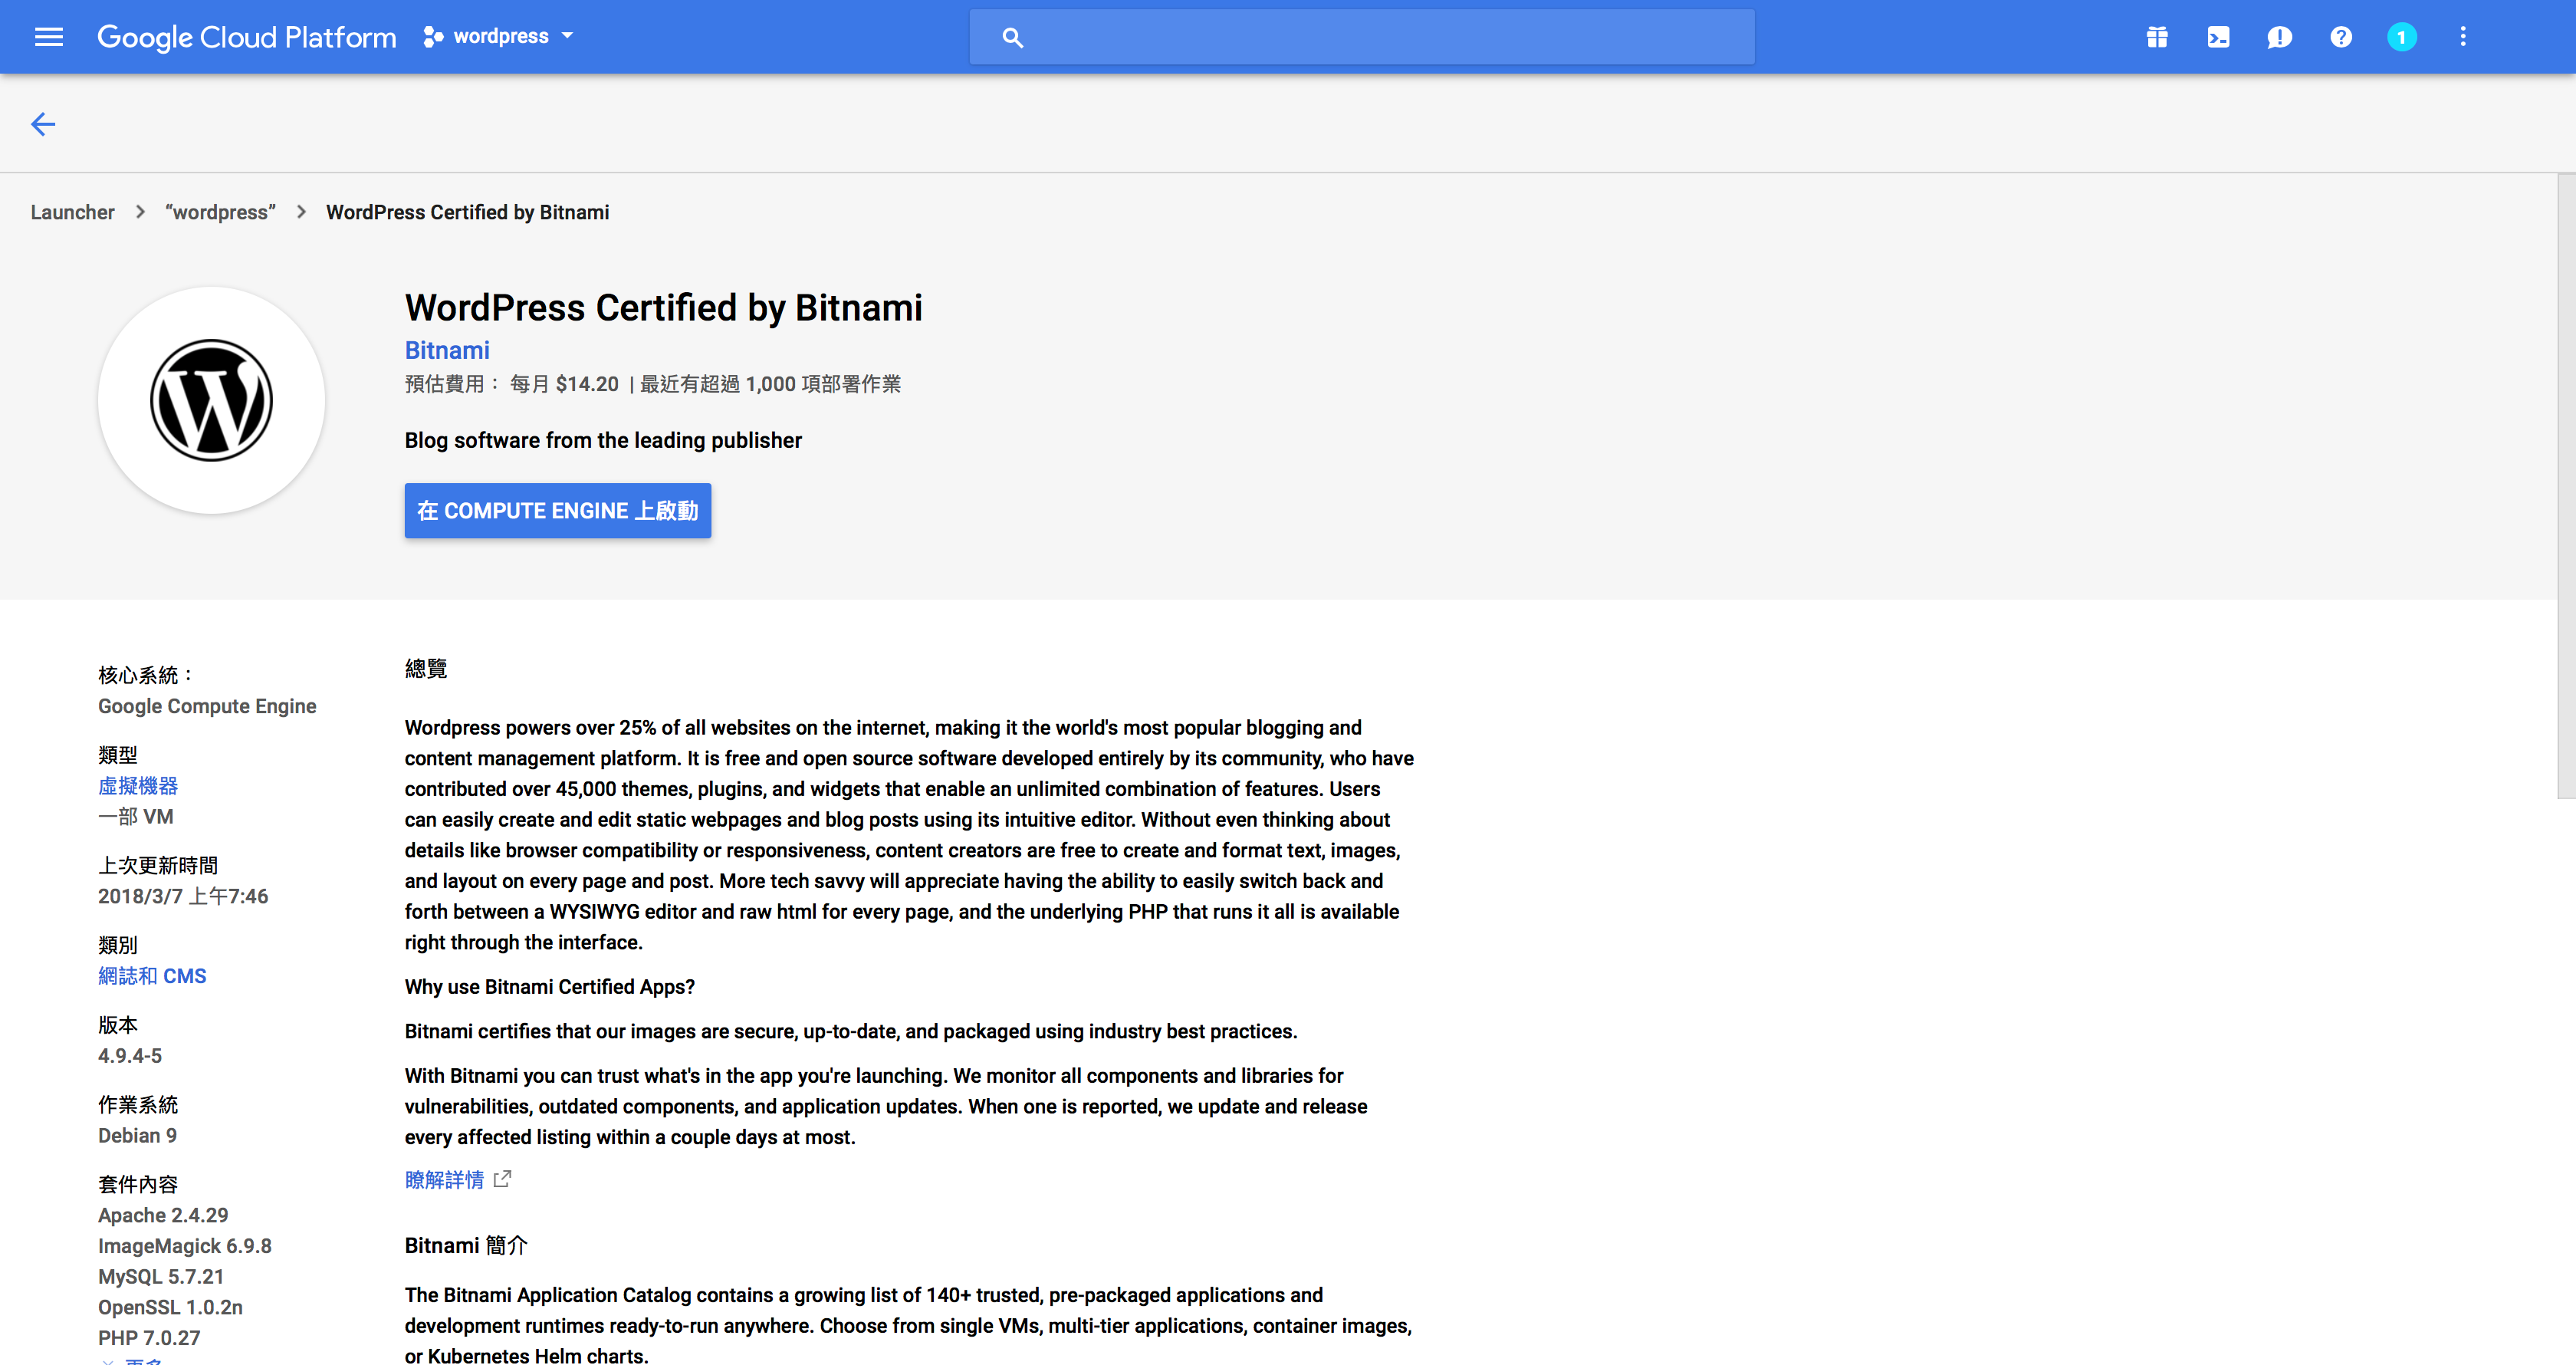 Cloud Launcher - WordPress Certified by Bitnami 簡介